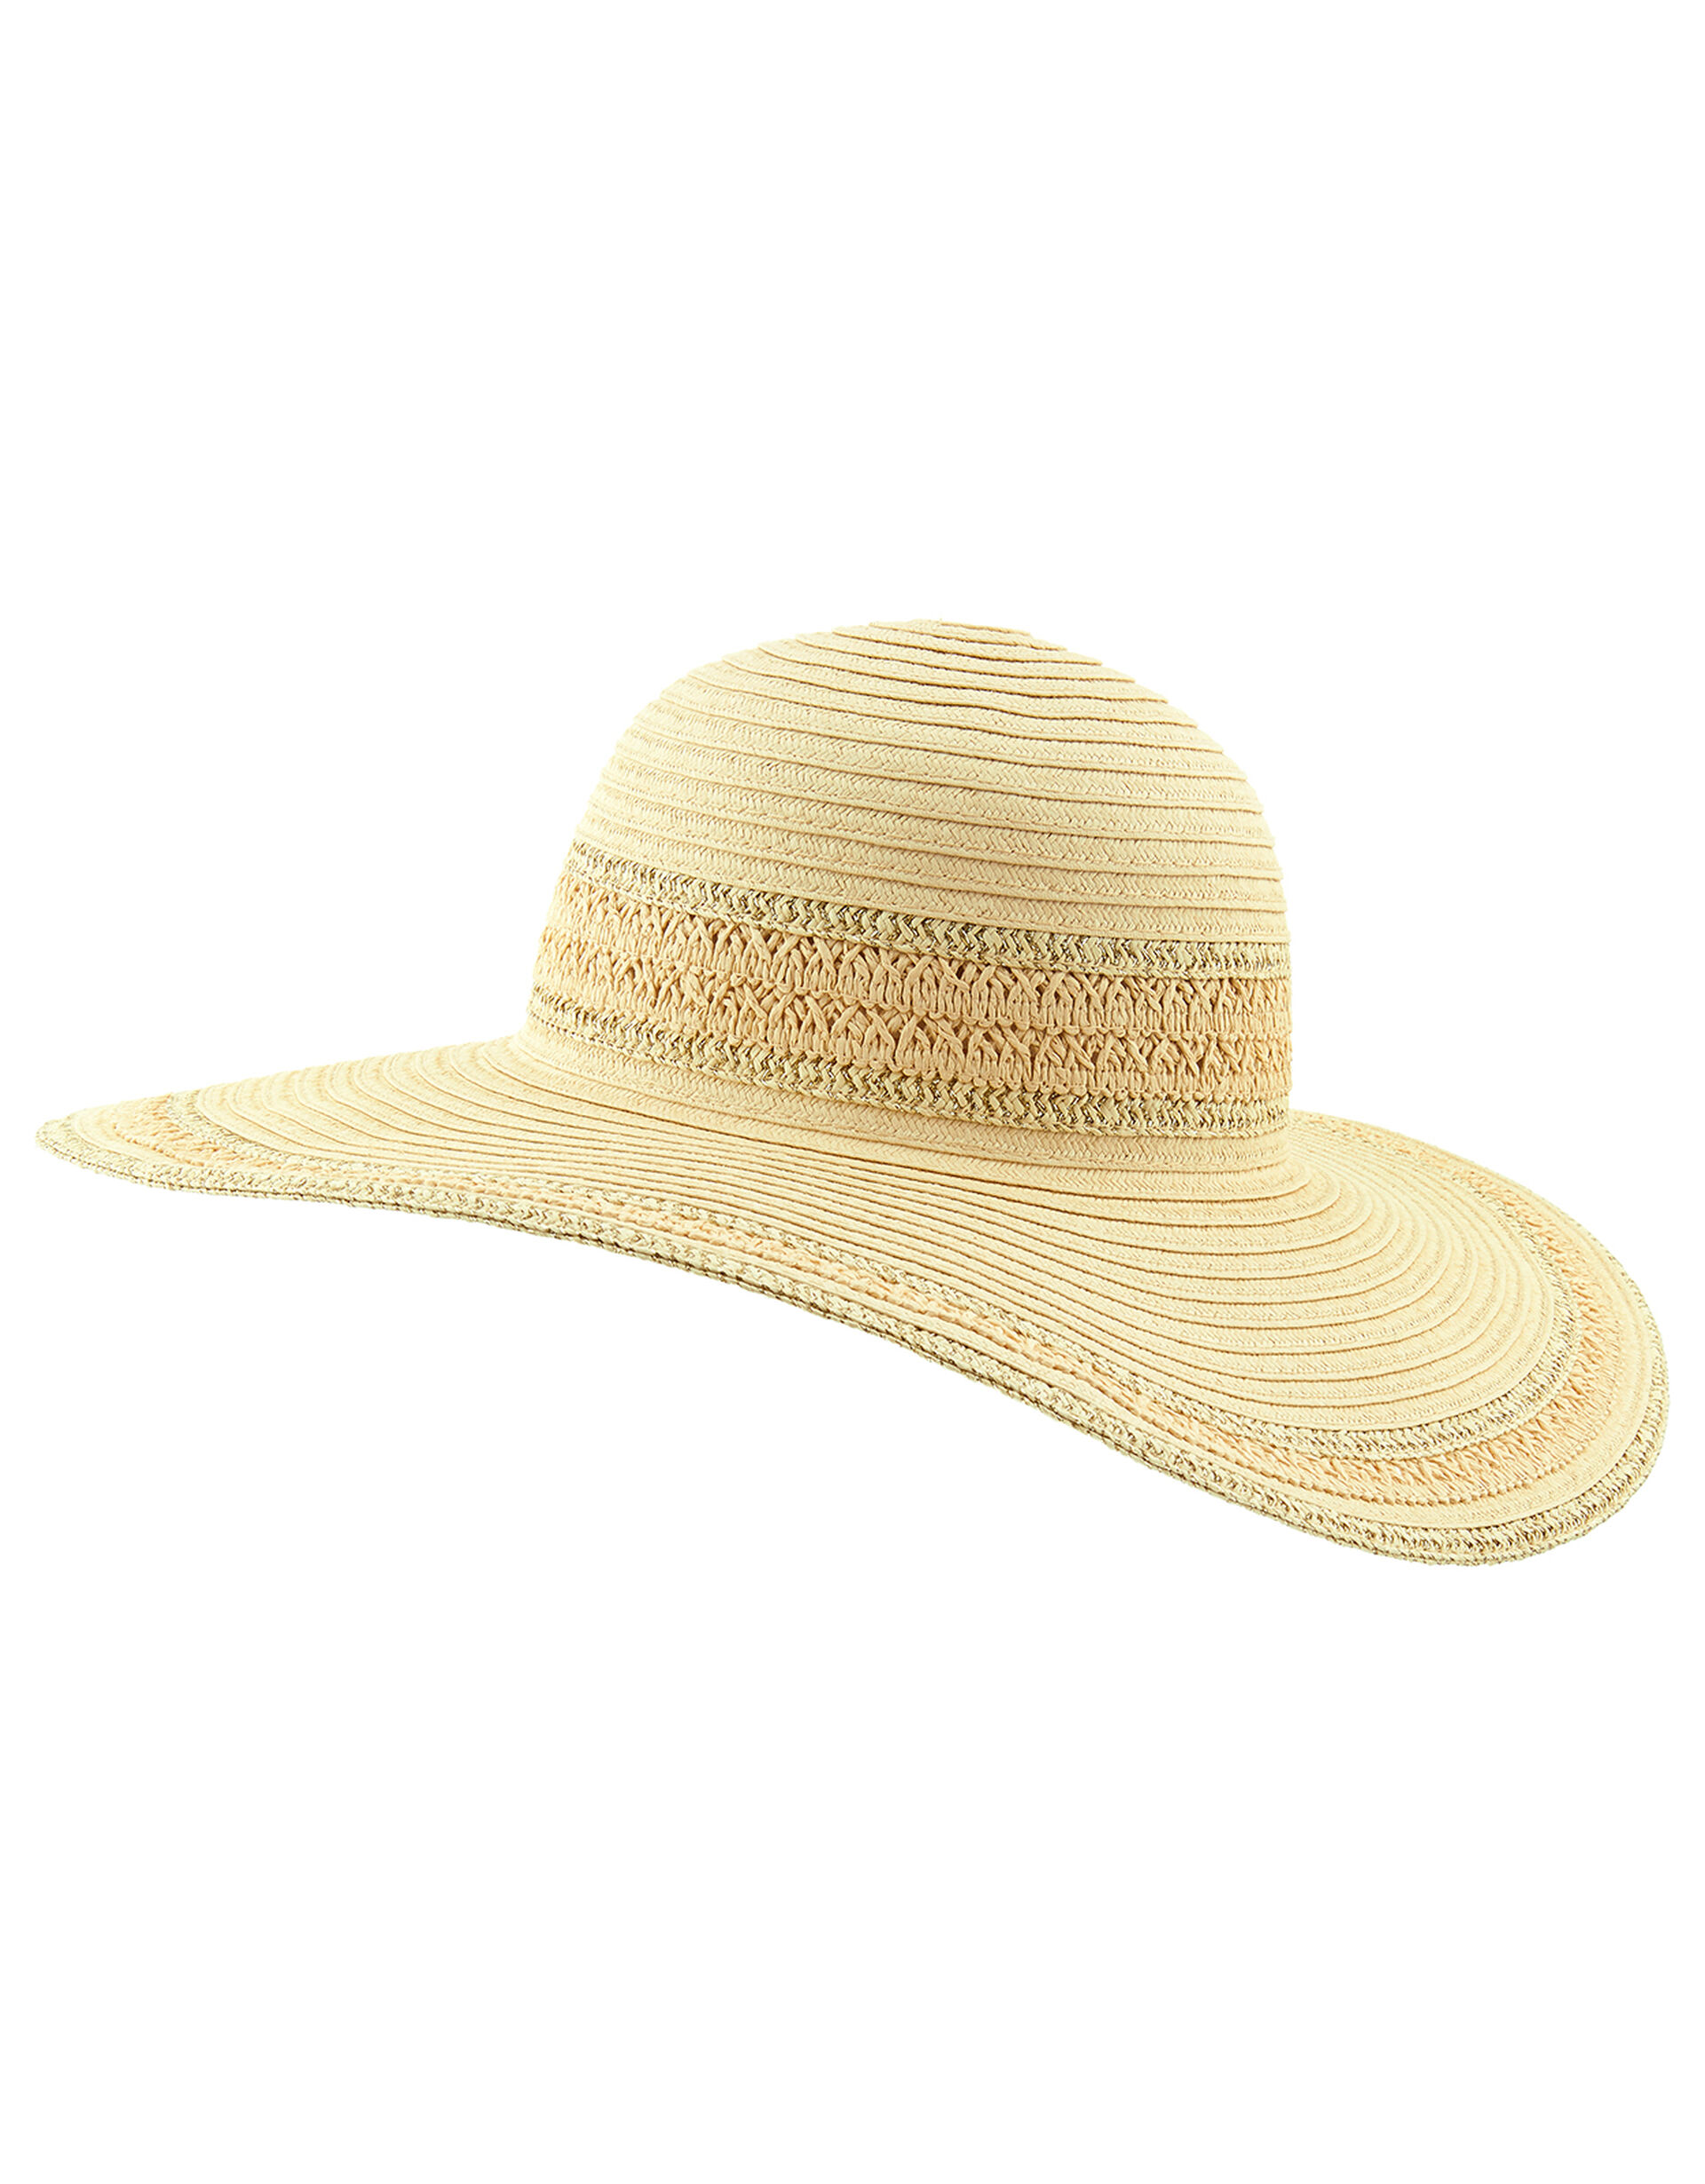 Sorento Floppy Hat , Natural (NATURAL), large